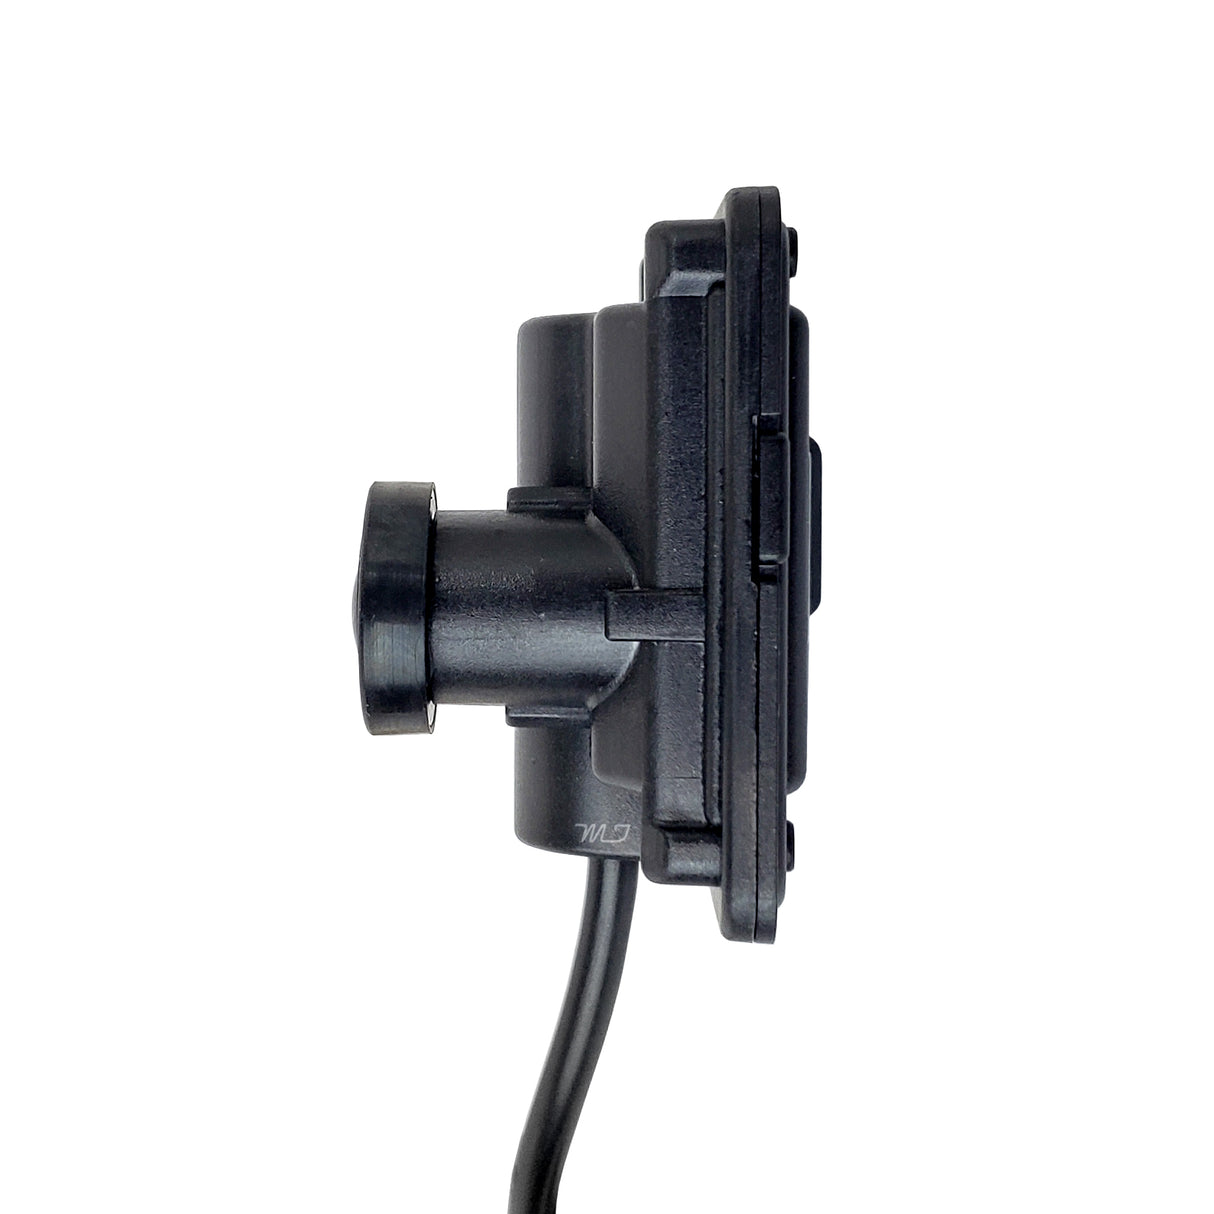 Lincoln Navigator (2008-2014) OEM Replacement Backup Camera OE Part # 8L7Z-19G490-A, 9L7Z-19G490-A, 9L7Z-19G490-B